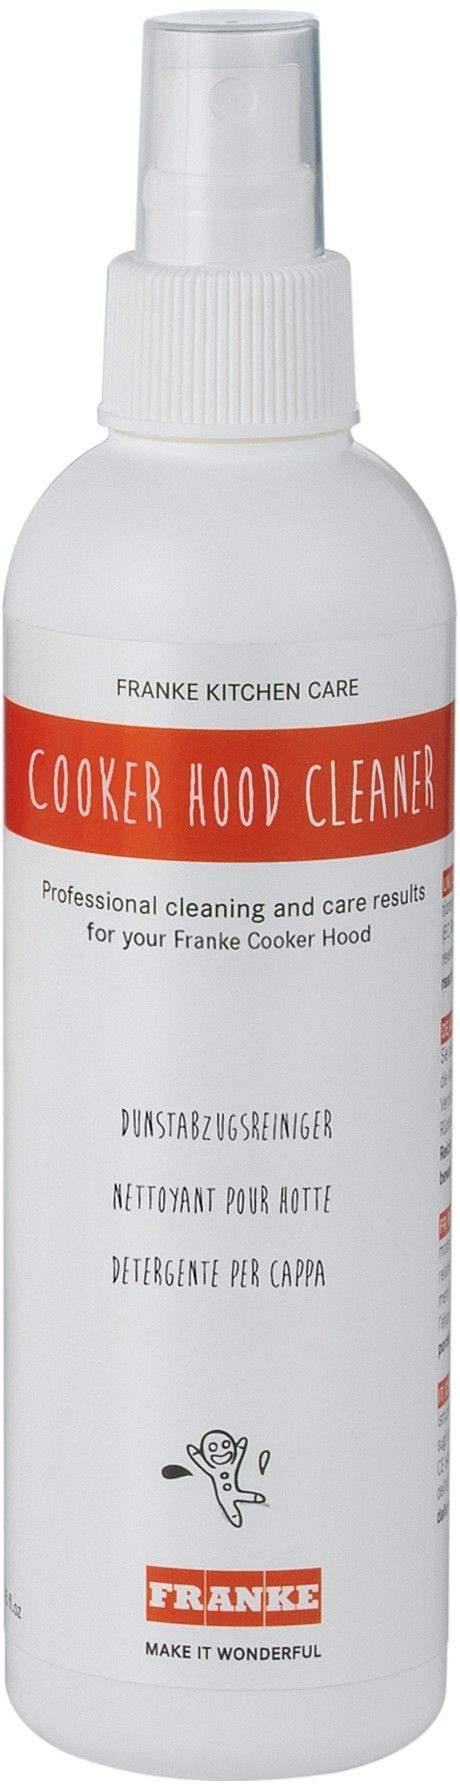 Franke Cooker Hood Cleaner 112.0530.240